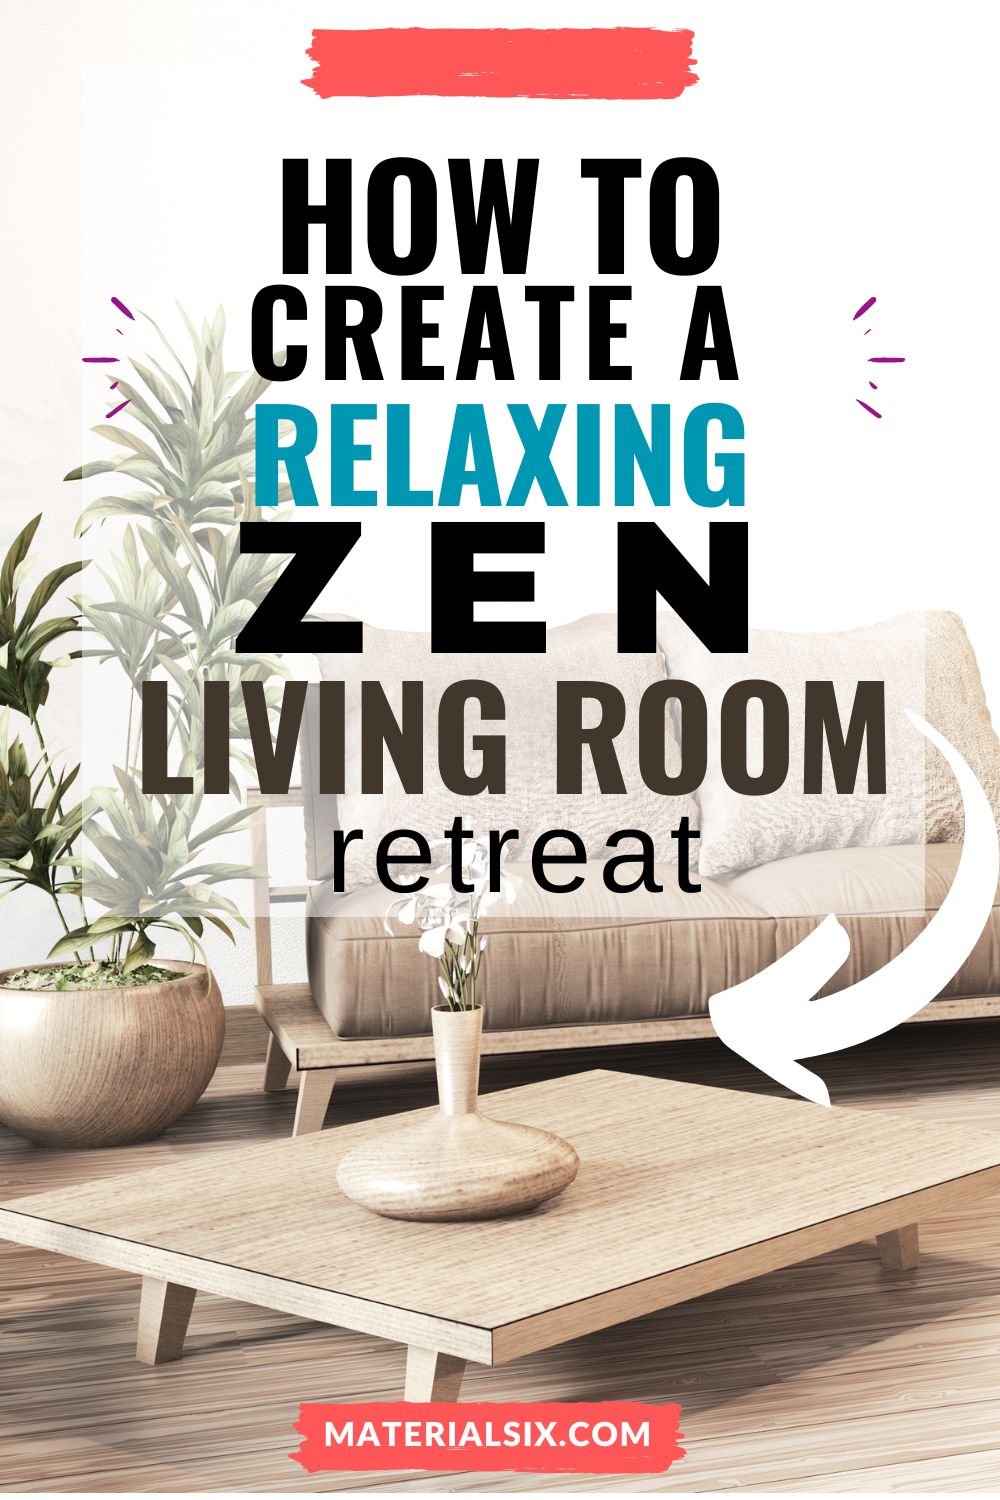 How to Create a Relaxing Zen Living Room Retreat (1)